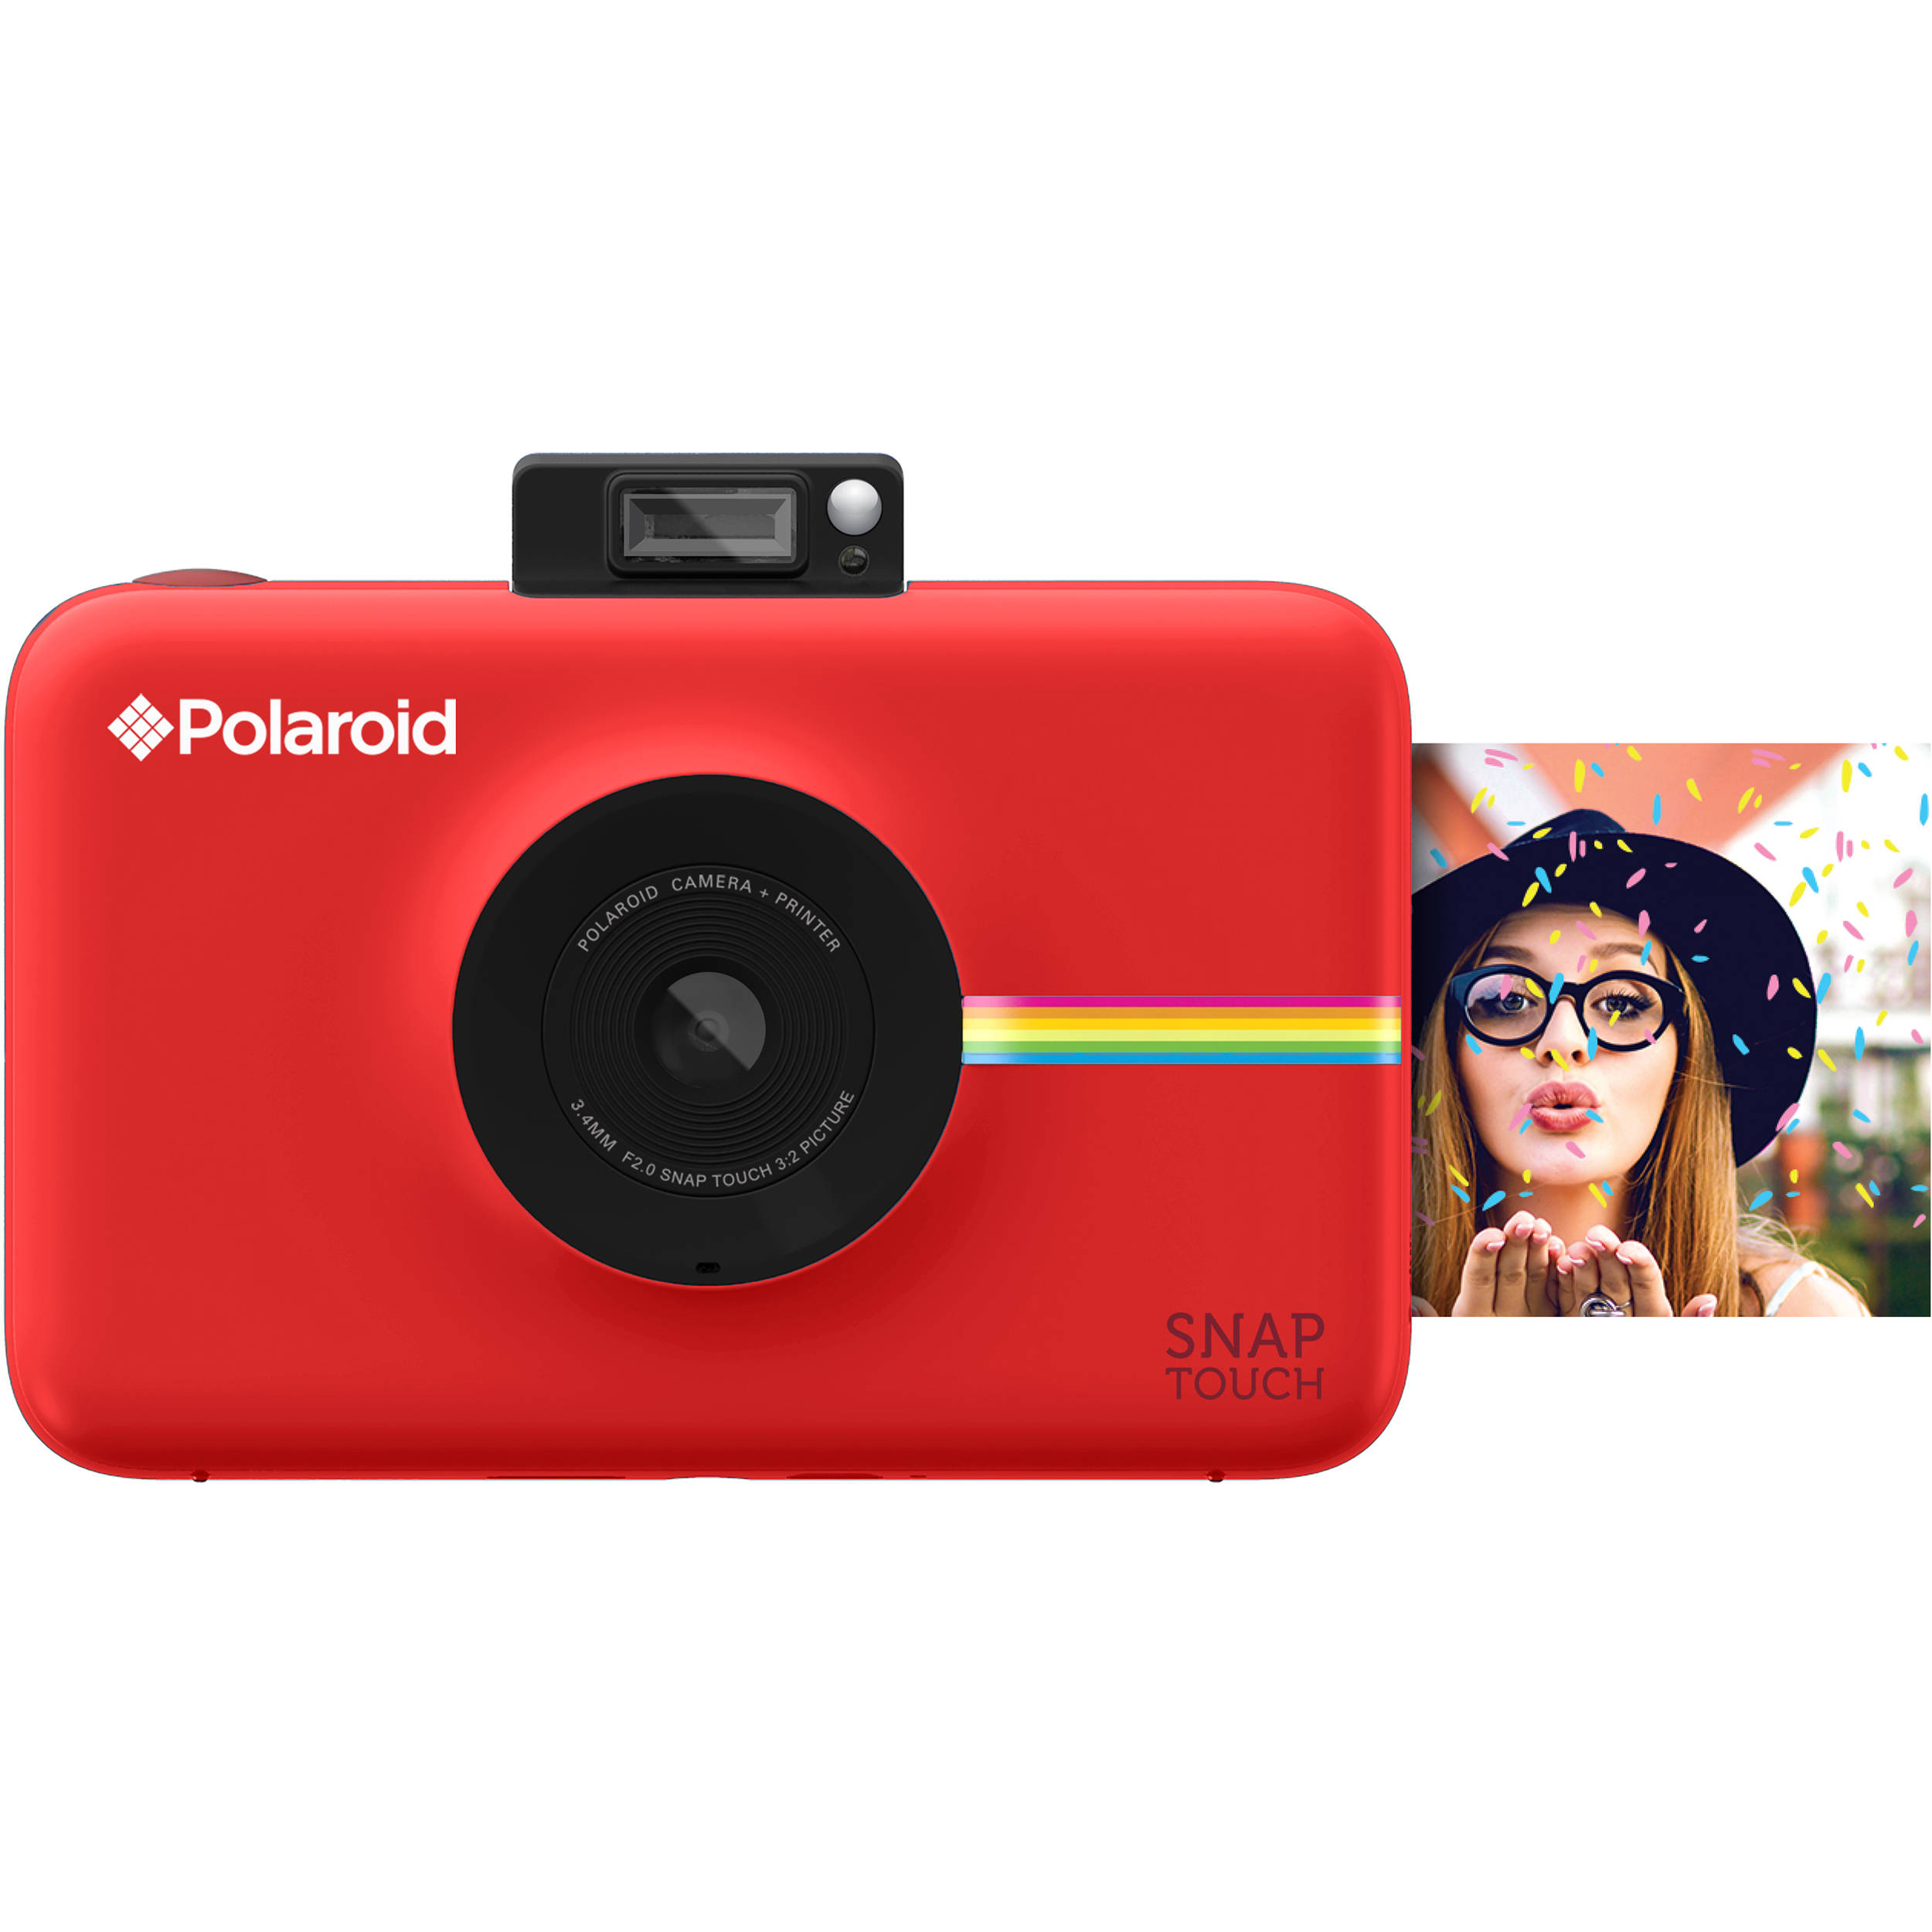 polaroid snap camera review